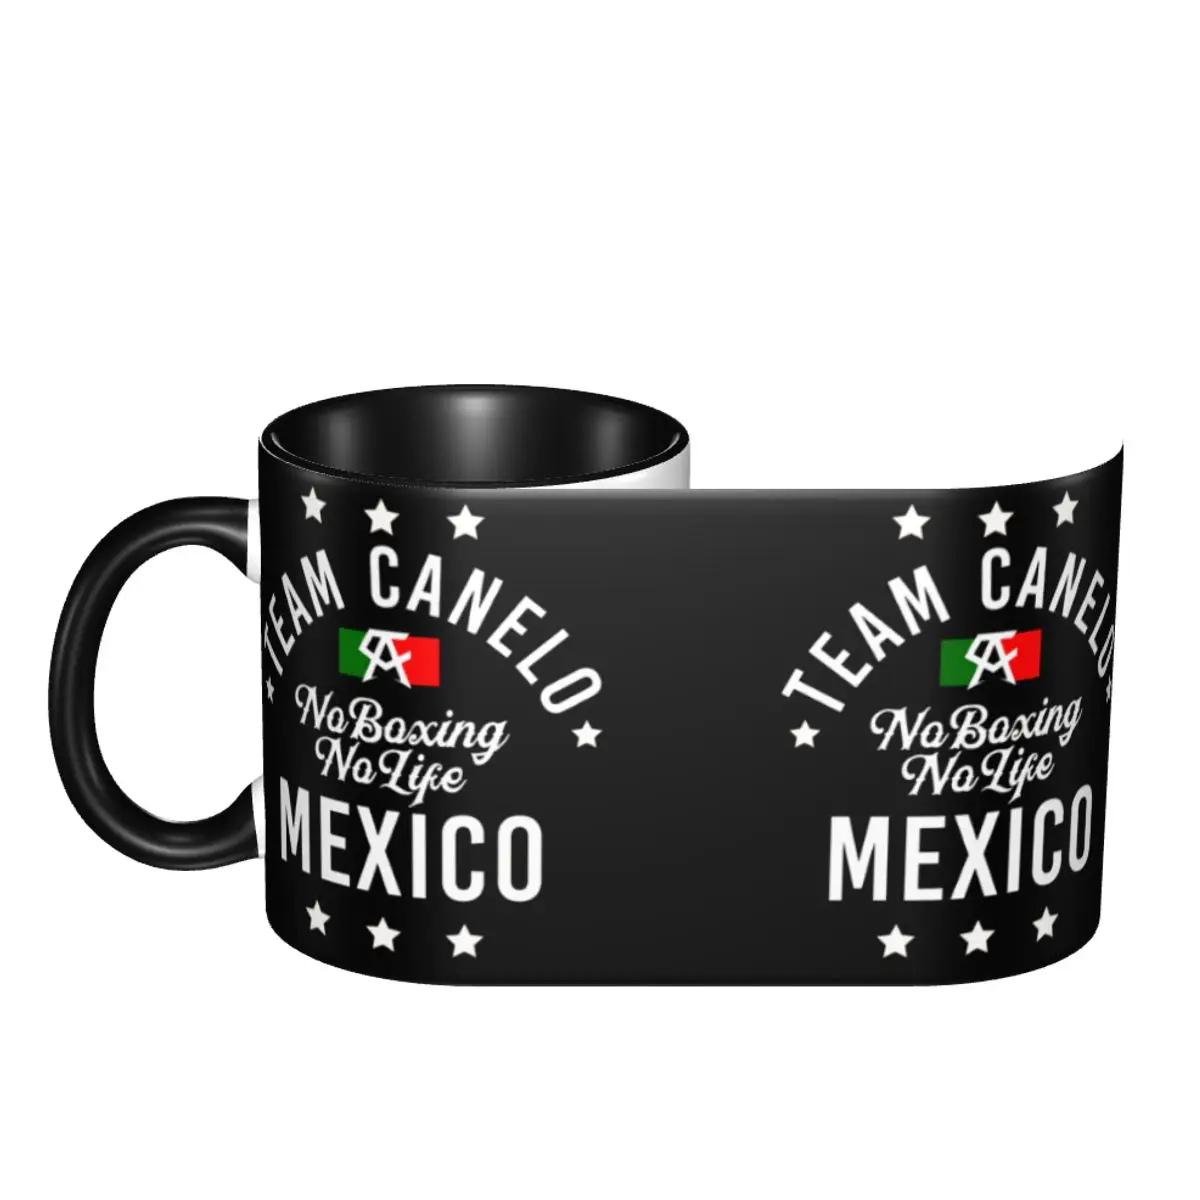 

Team Canelos Alvarez Mexico Essential premium Cups Mugs Print Mugs R257 Funny Sarcastic milk cups